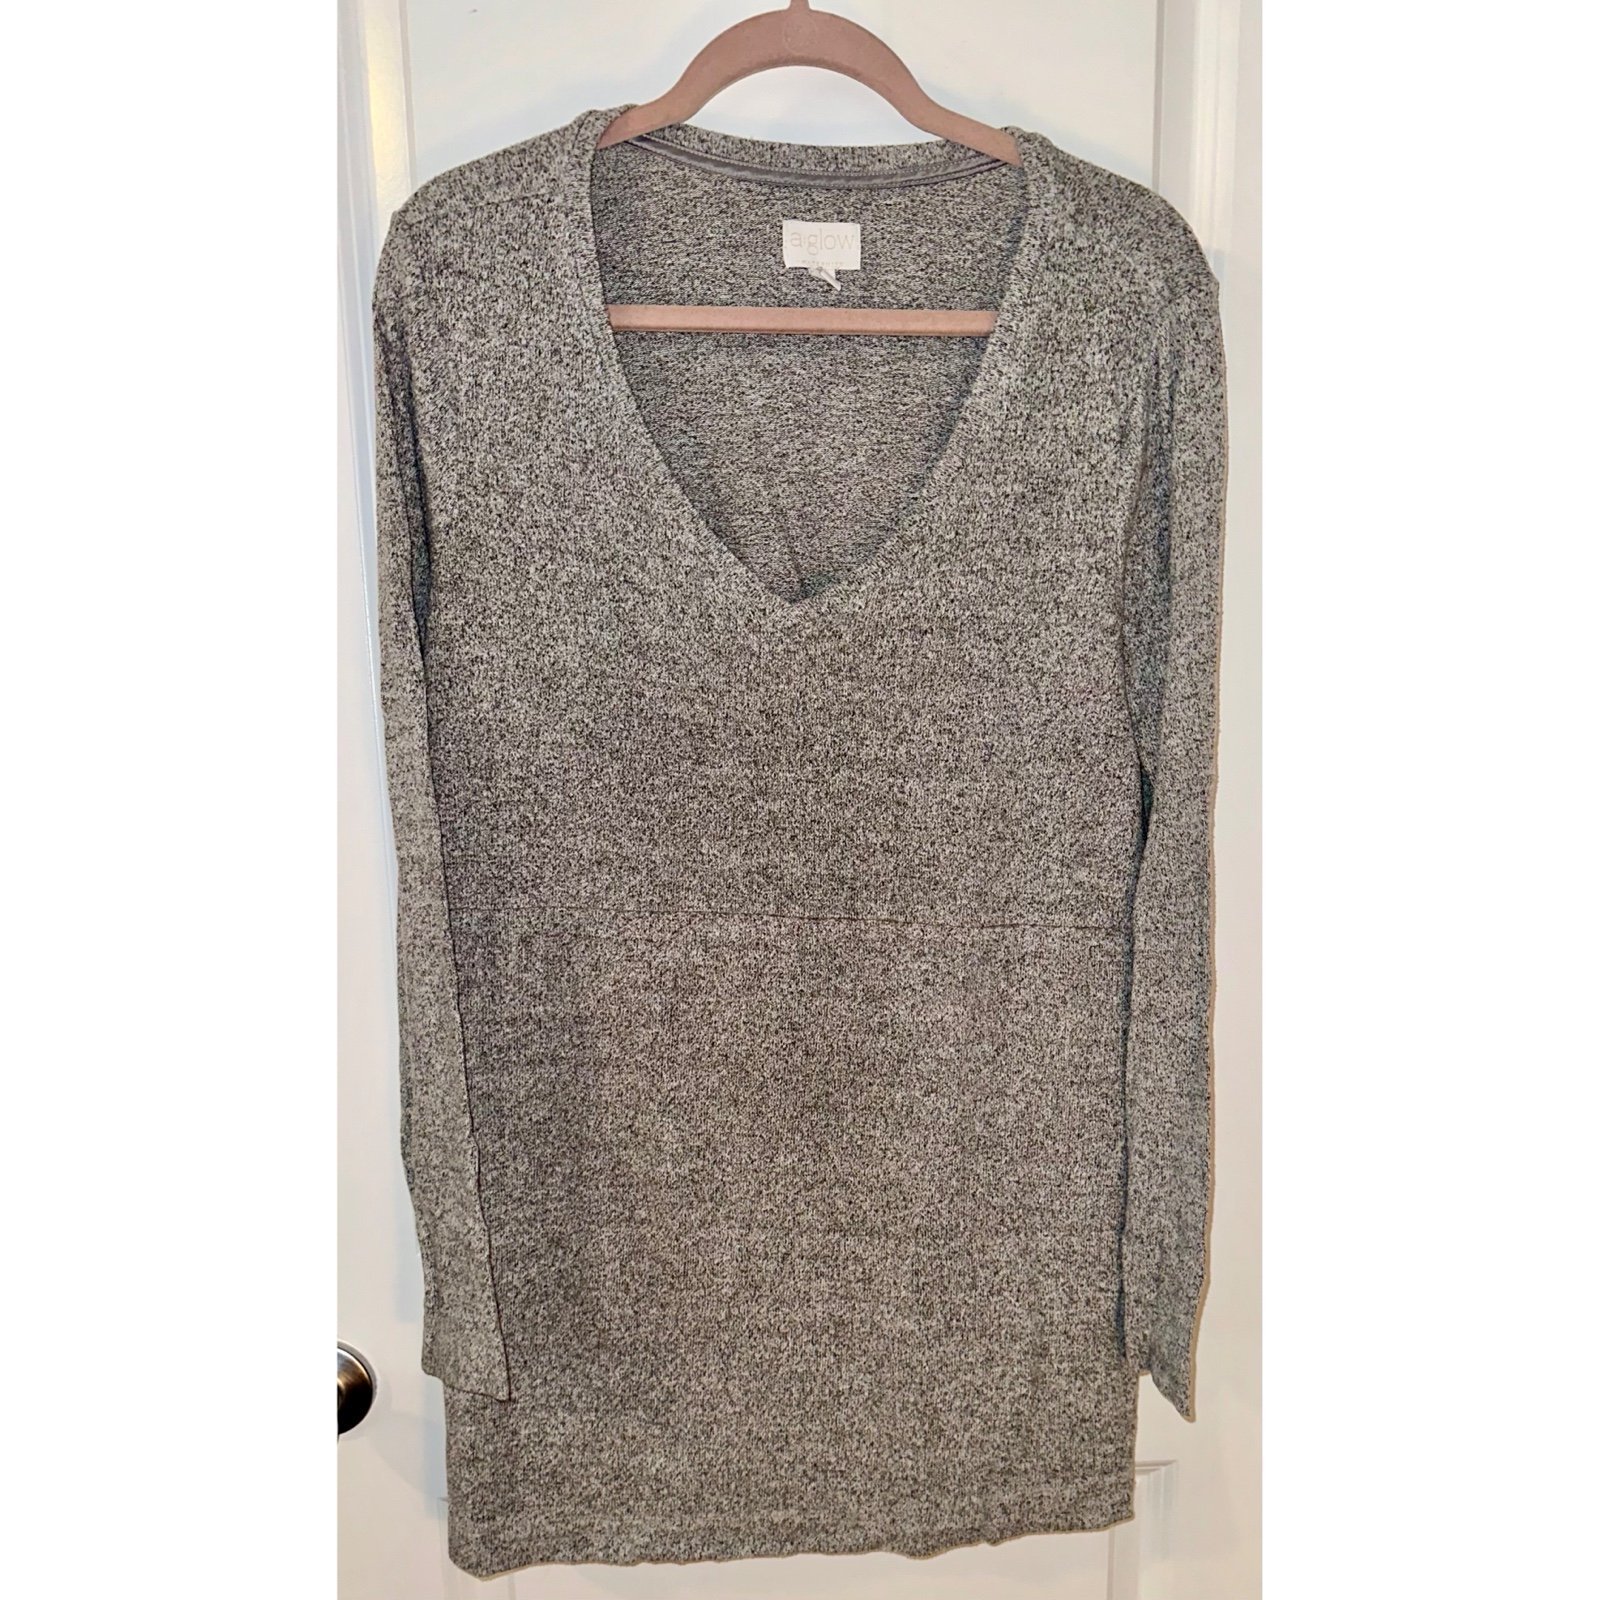 A Glow Grey Maternity Sweater Size XL fydYP4e8B